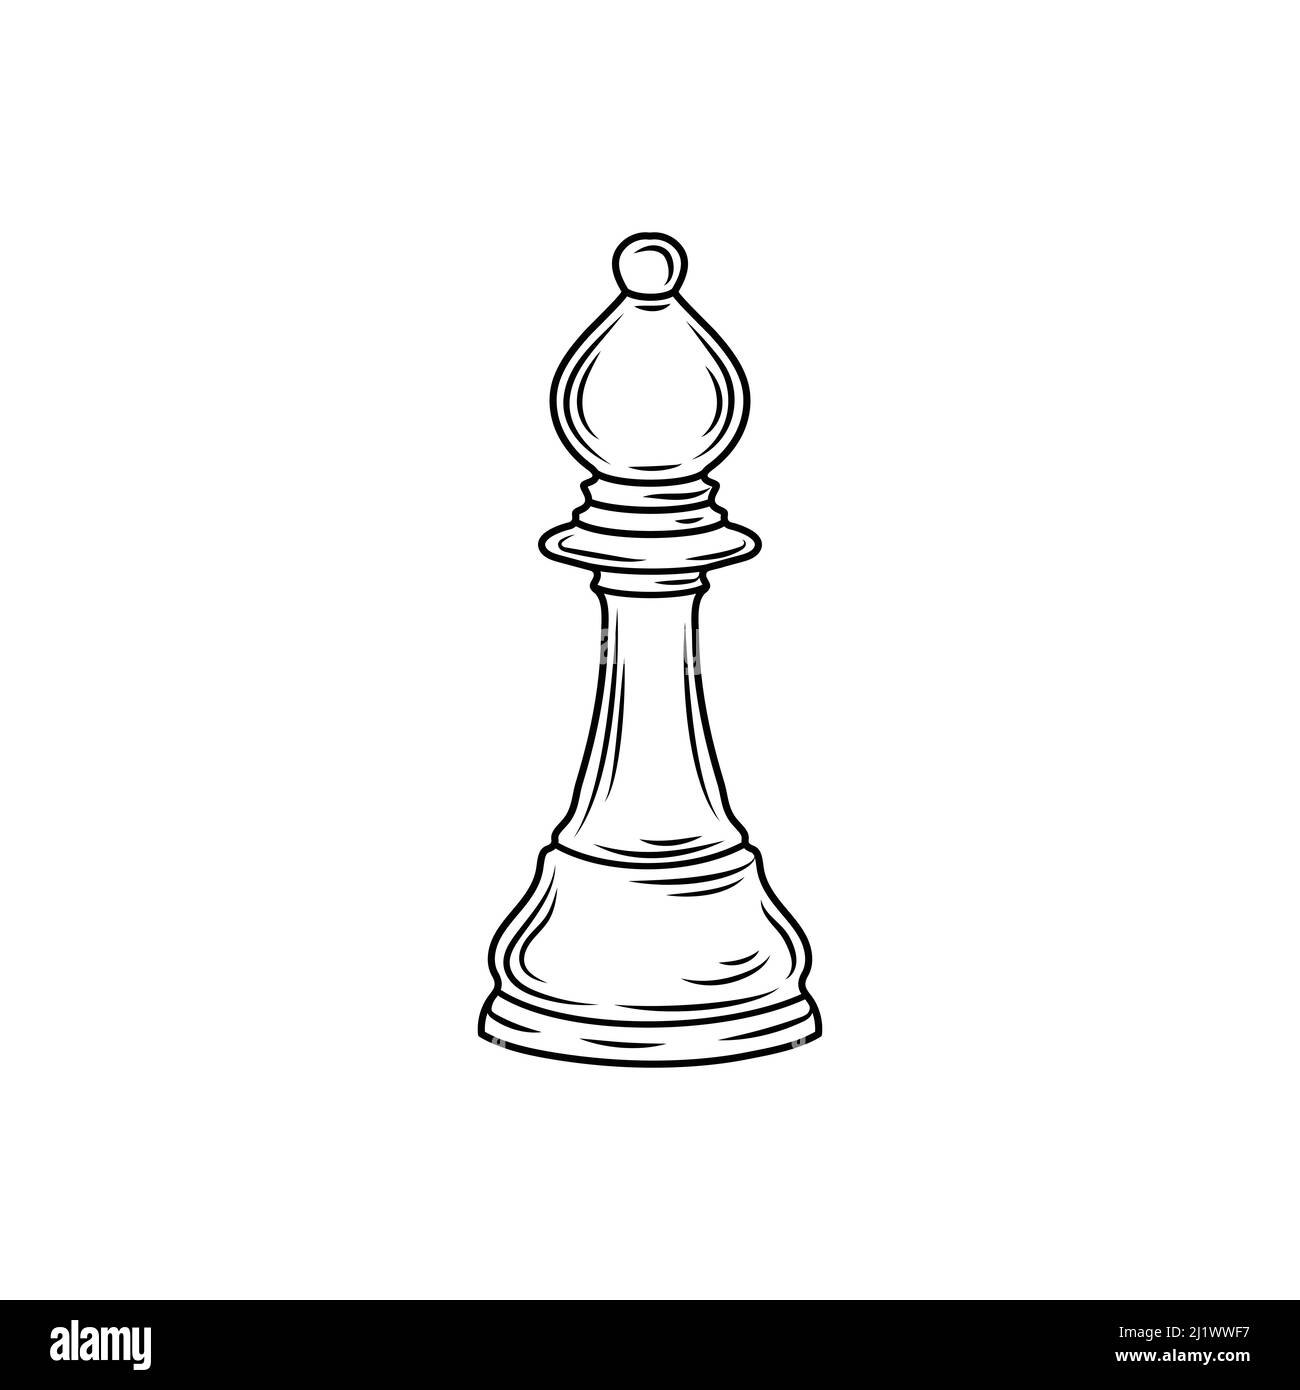 27 Ilustrações de Bishop Chess Piece - Getty Images